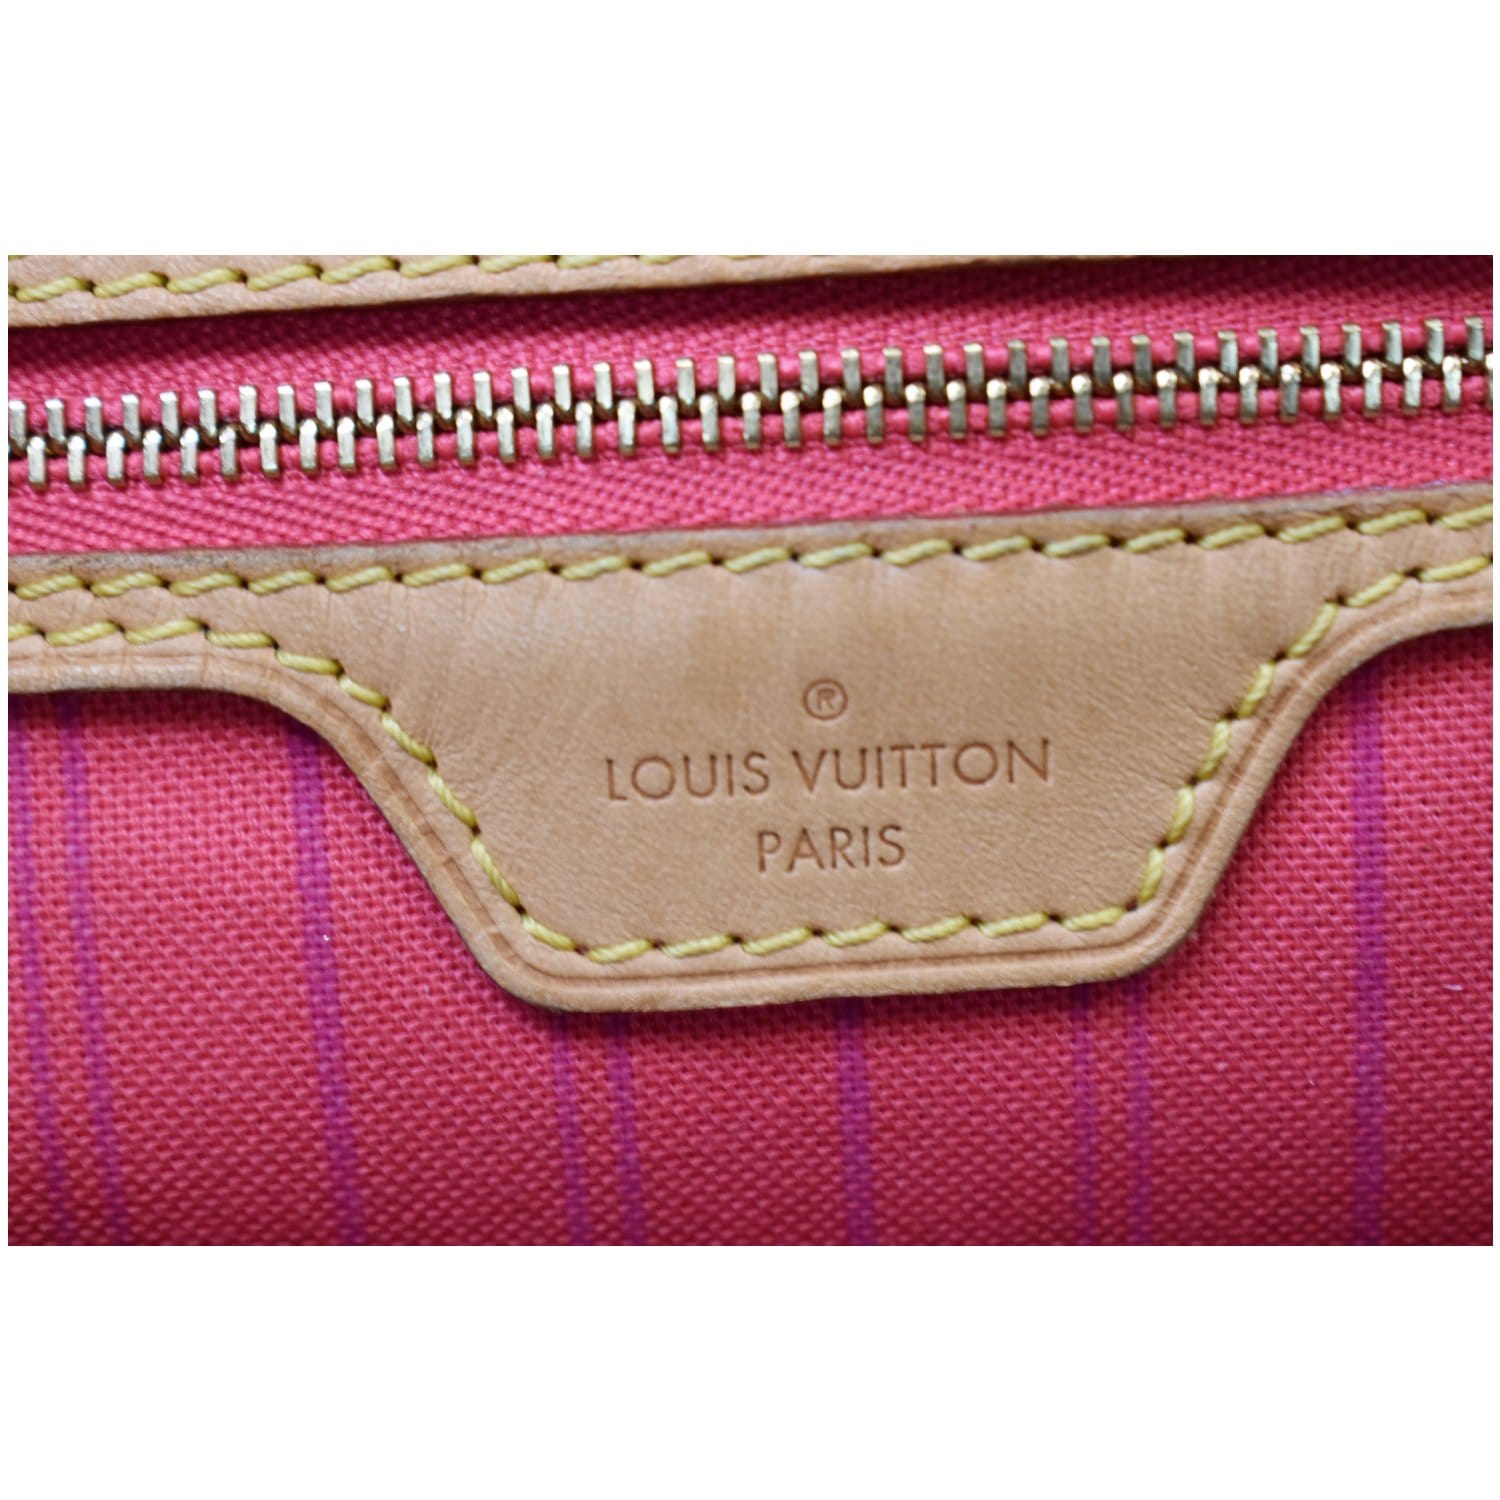 New 2015 Louis Vuitton delightful mm Azur!💕👜💕 